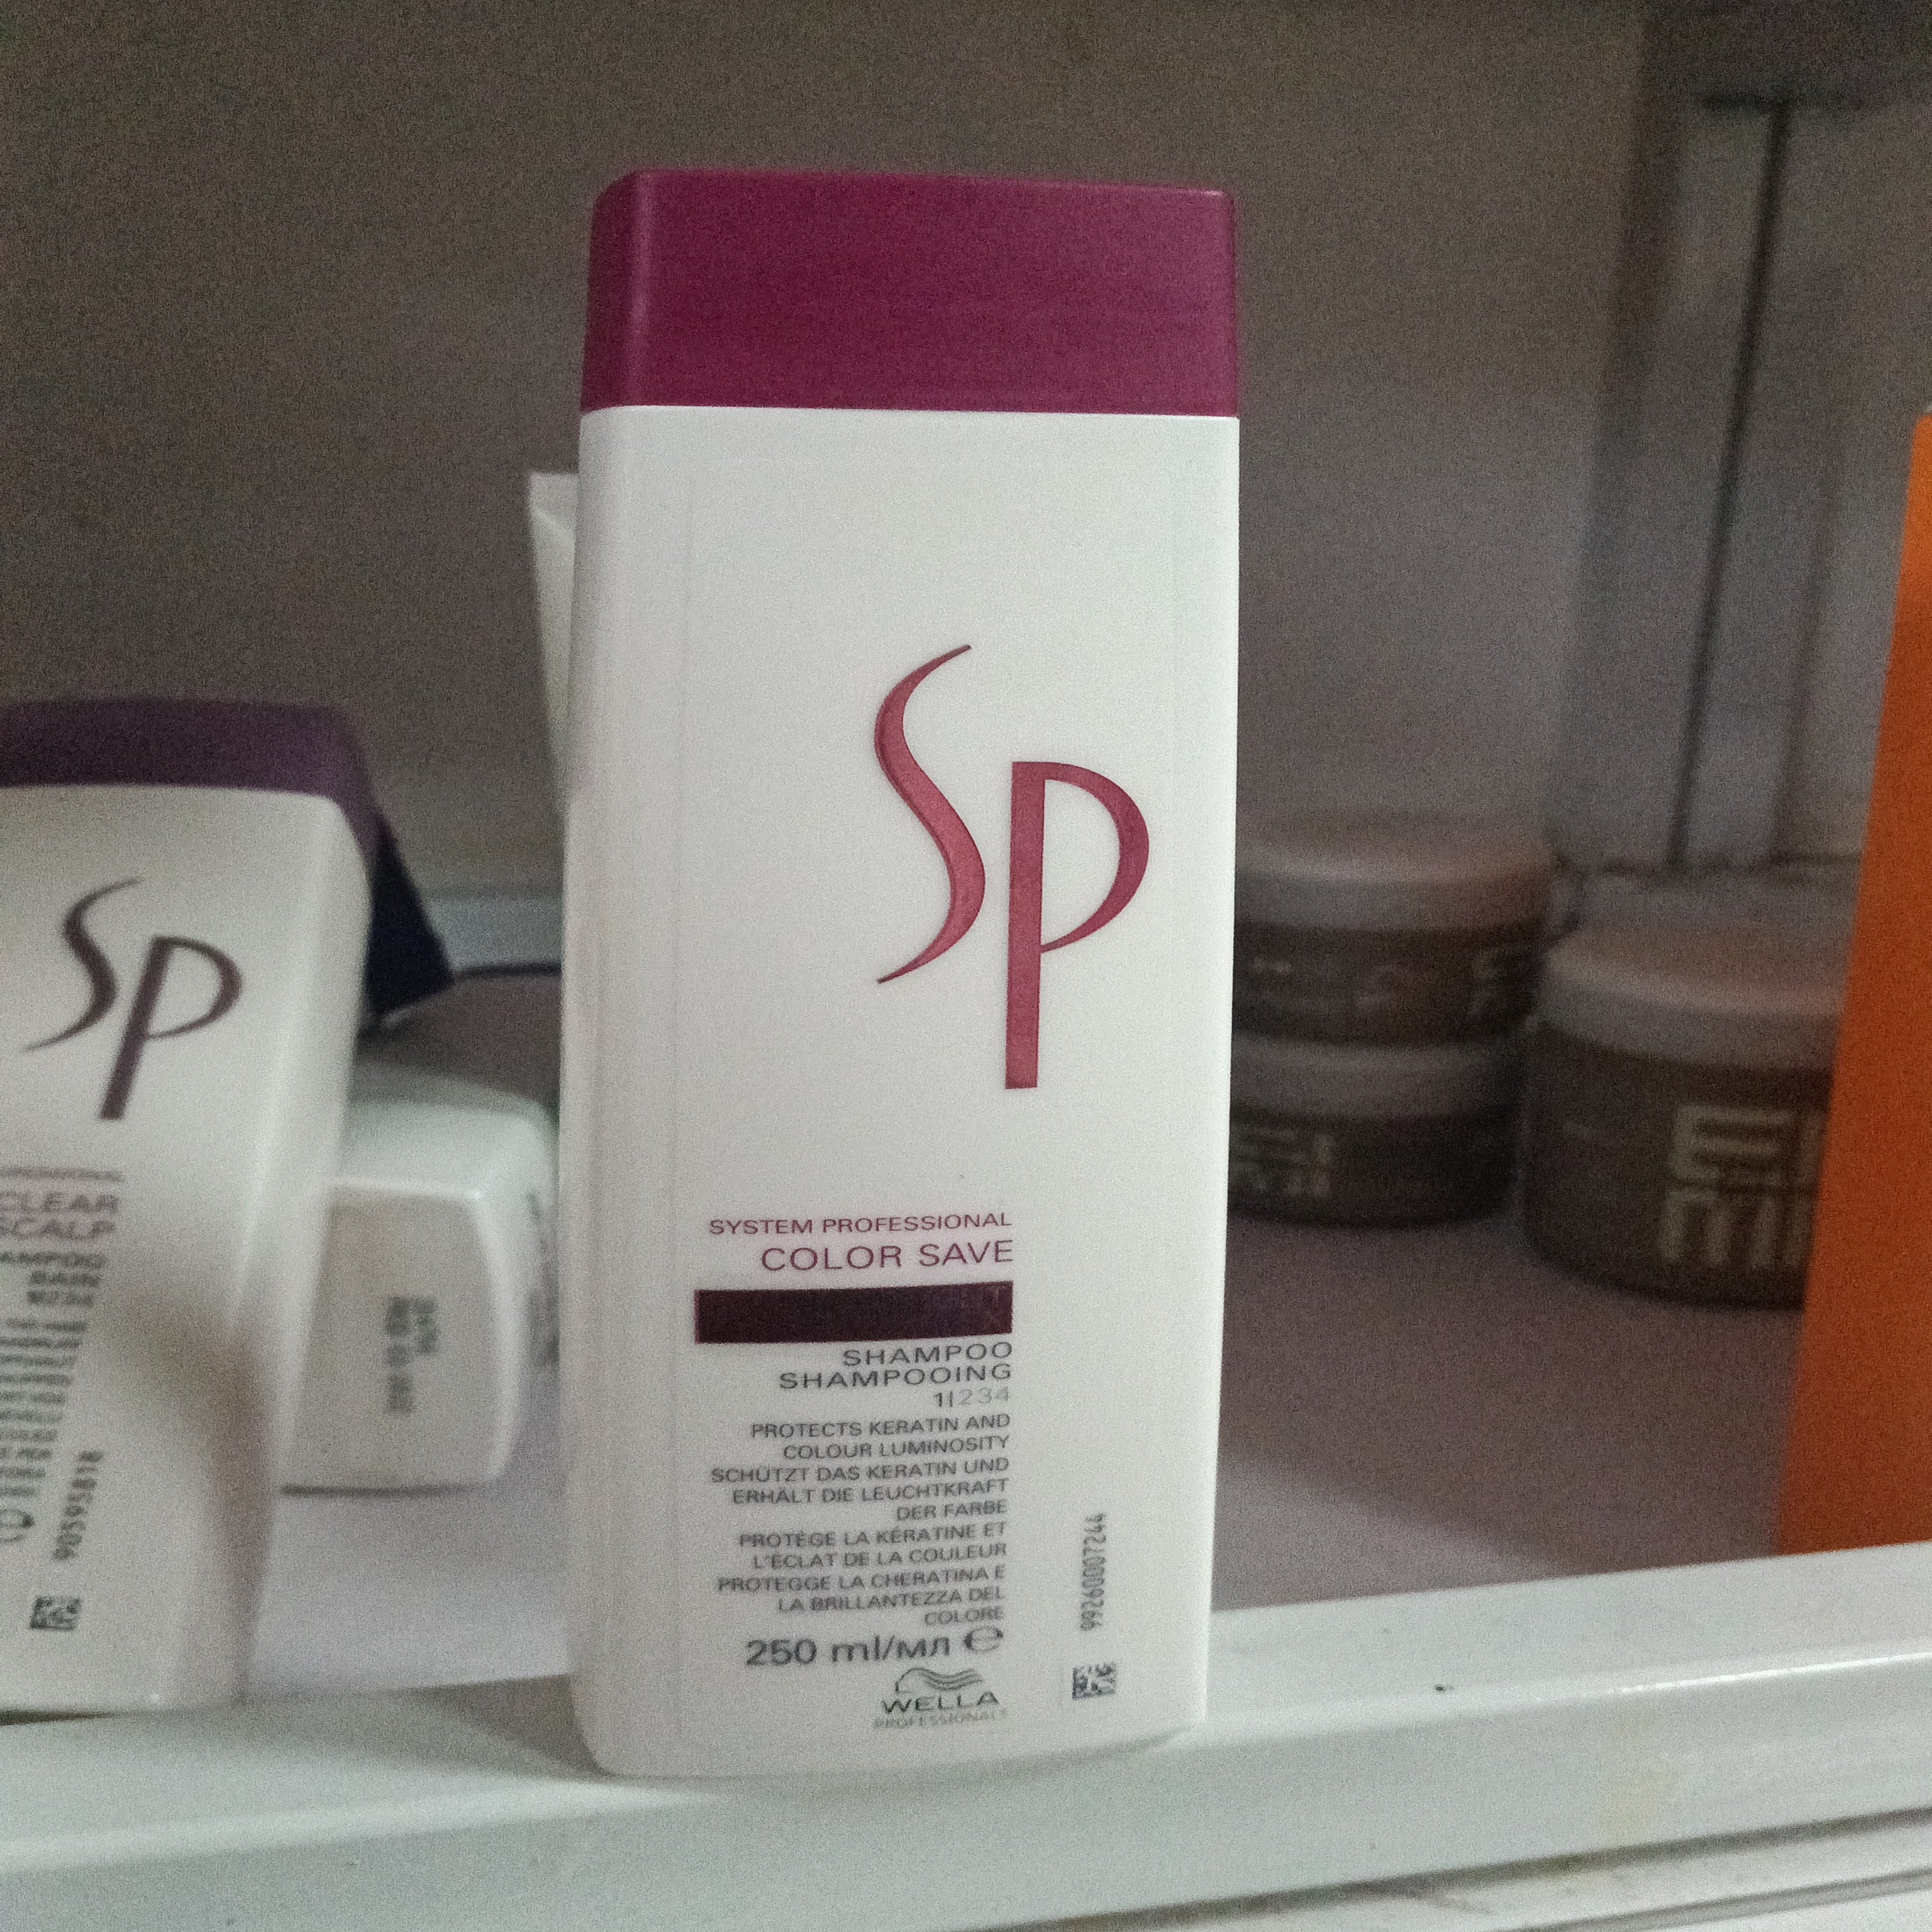 SP System Professional Color Save shampoo (250ml)